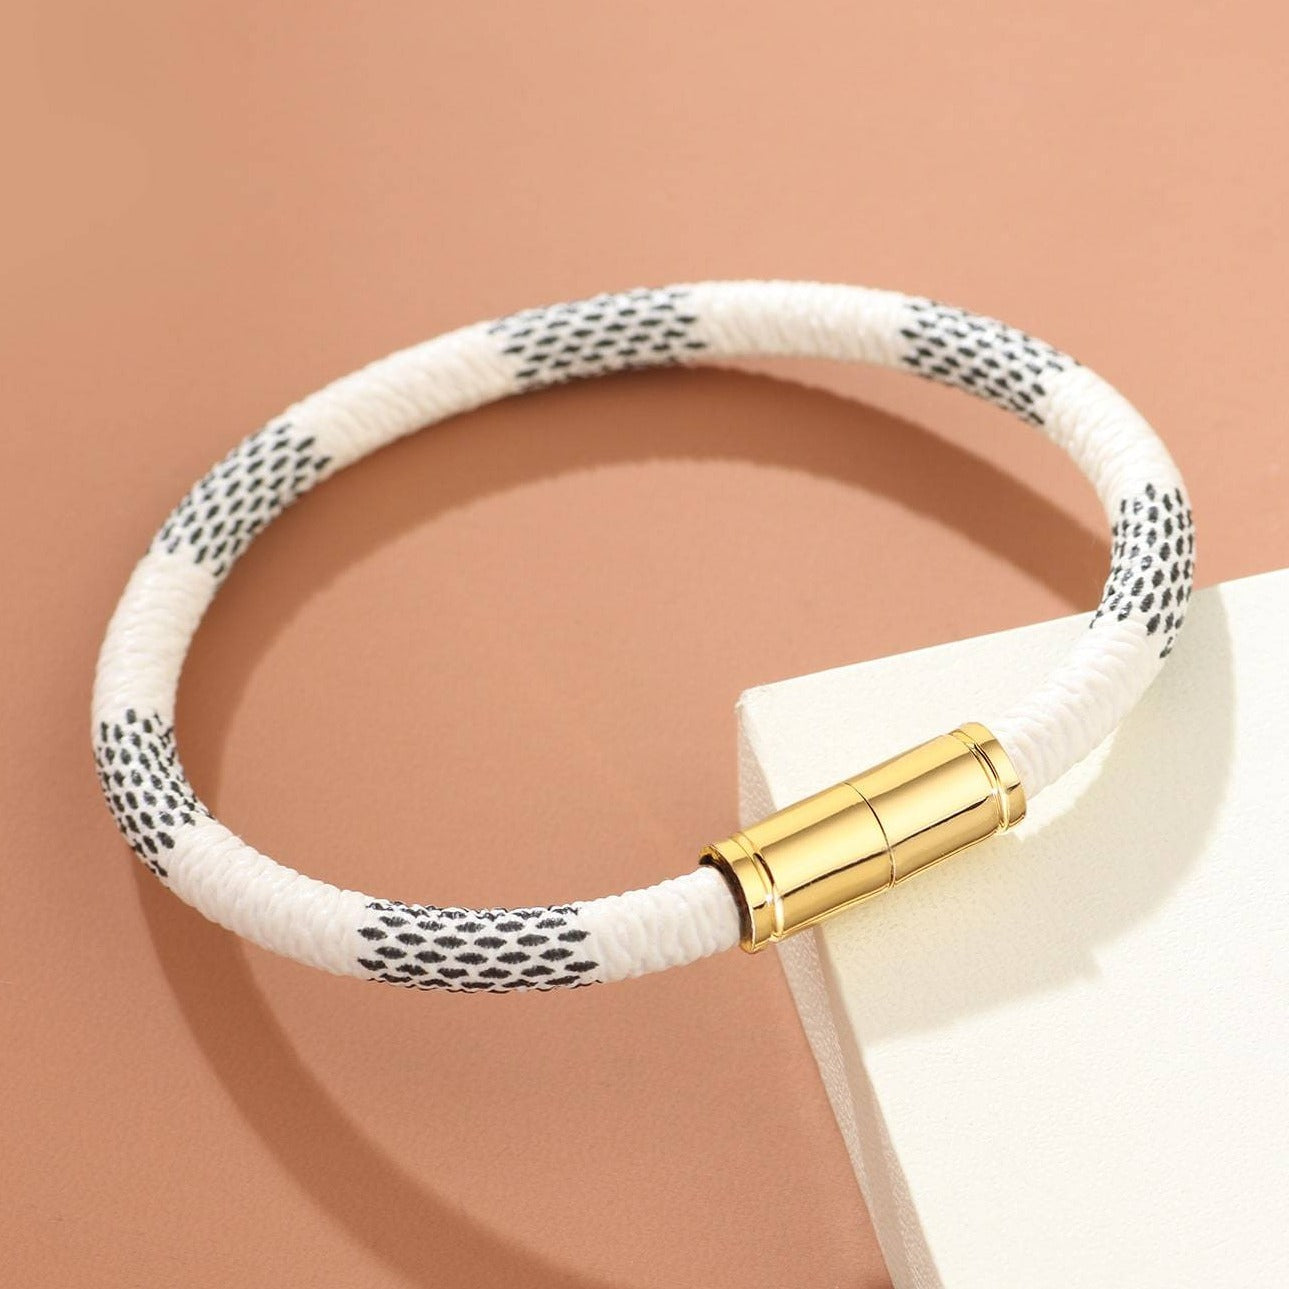 White and Grey Patterned Bracelet